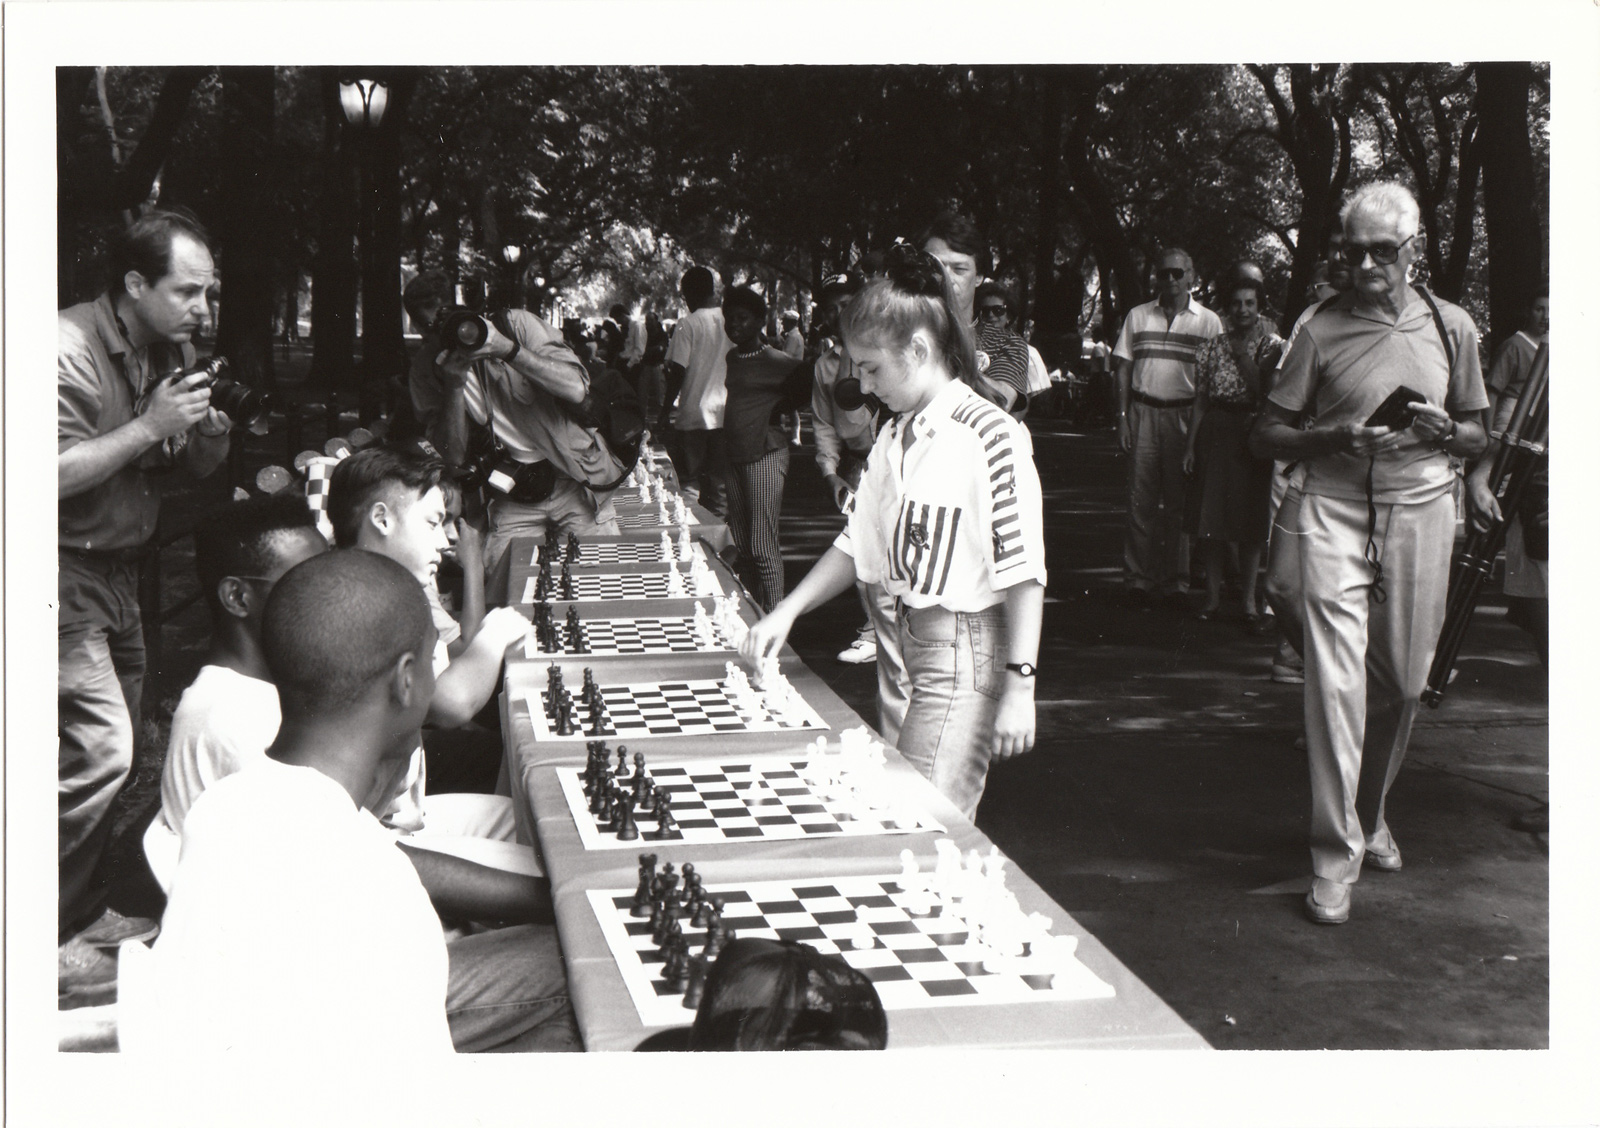 Interview: World Chess Championship's Judit Polgar - COOL HUNTING®